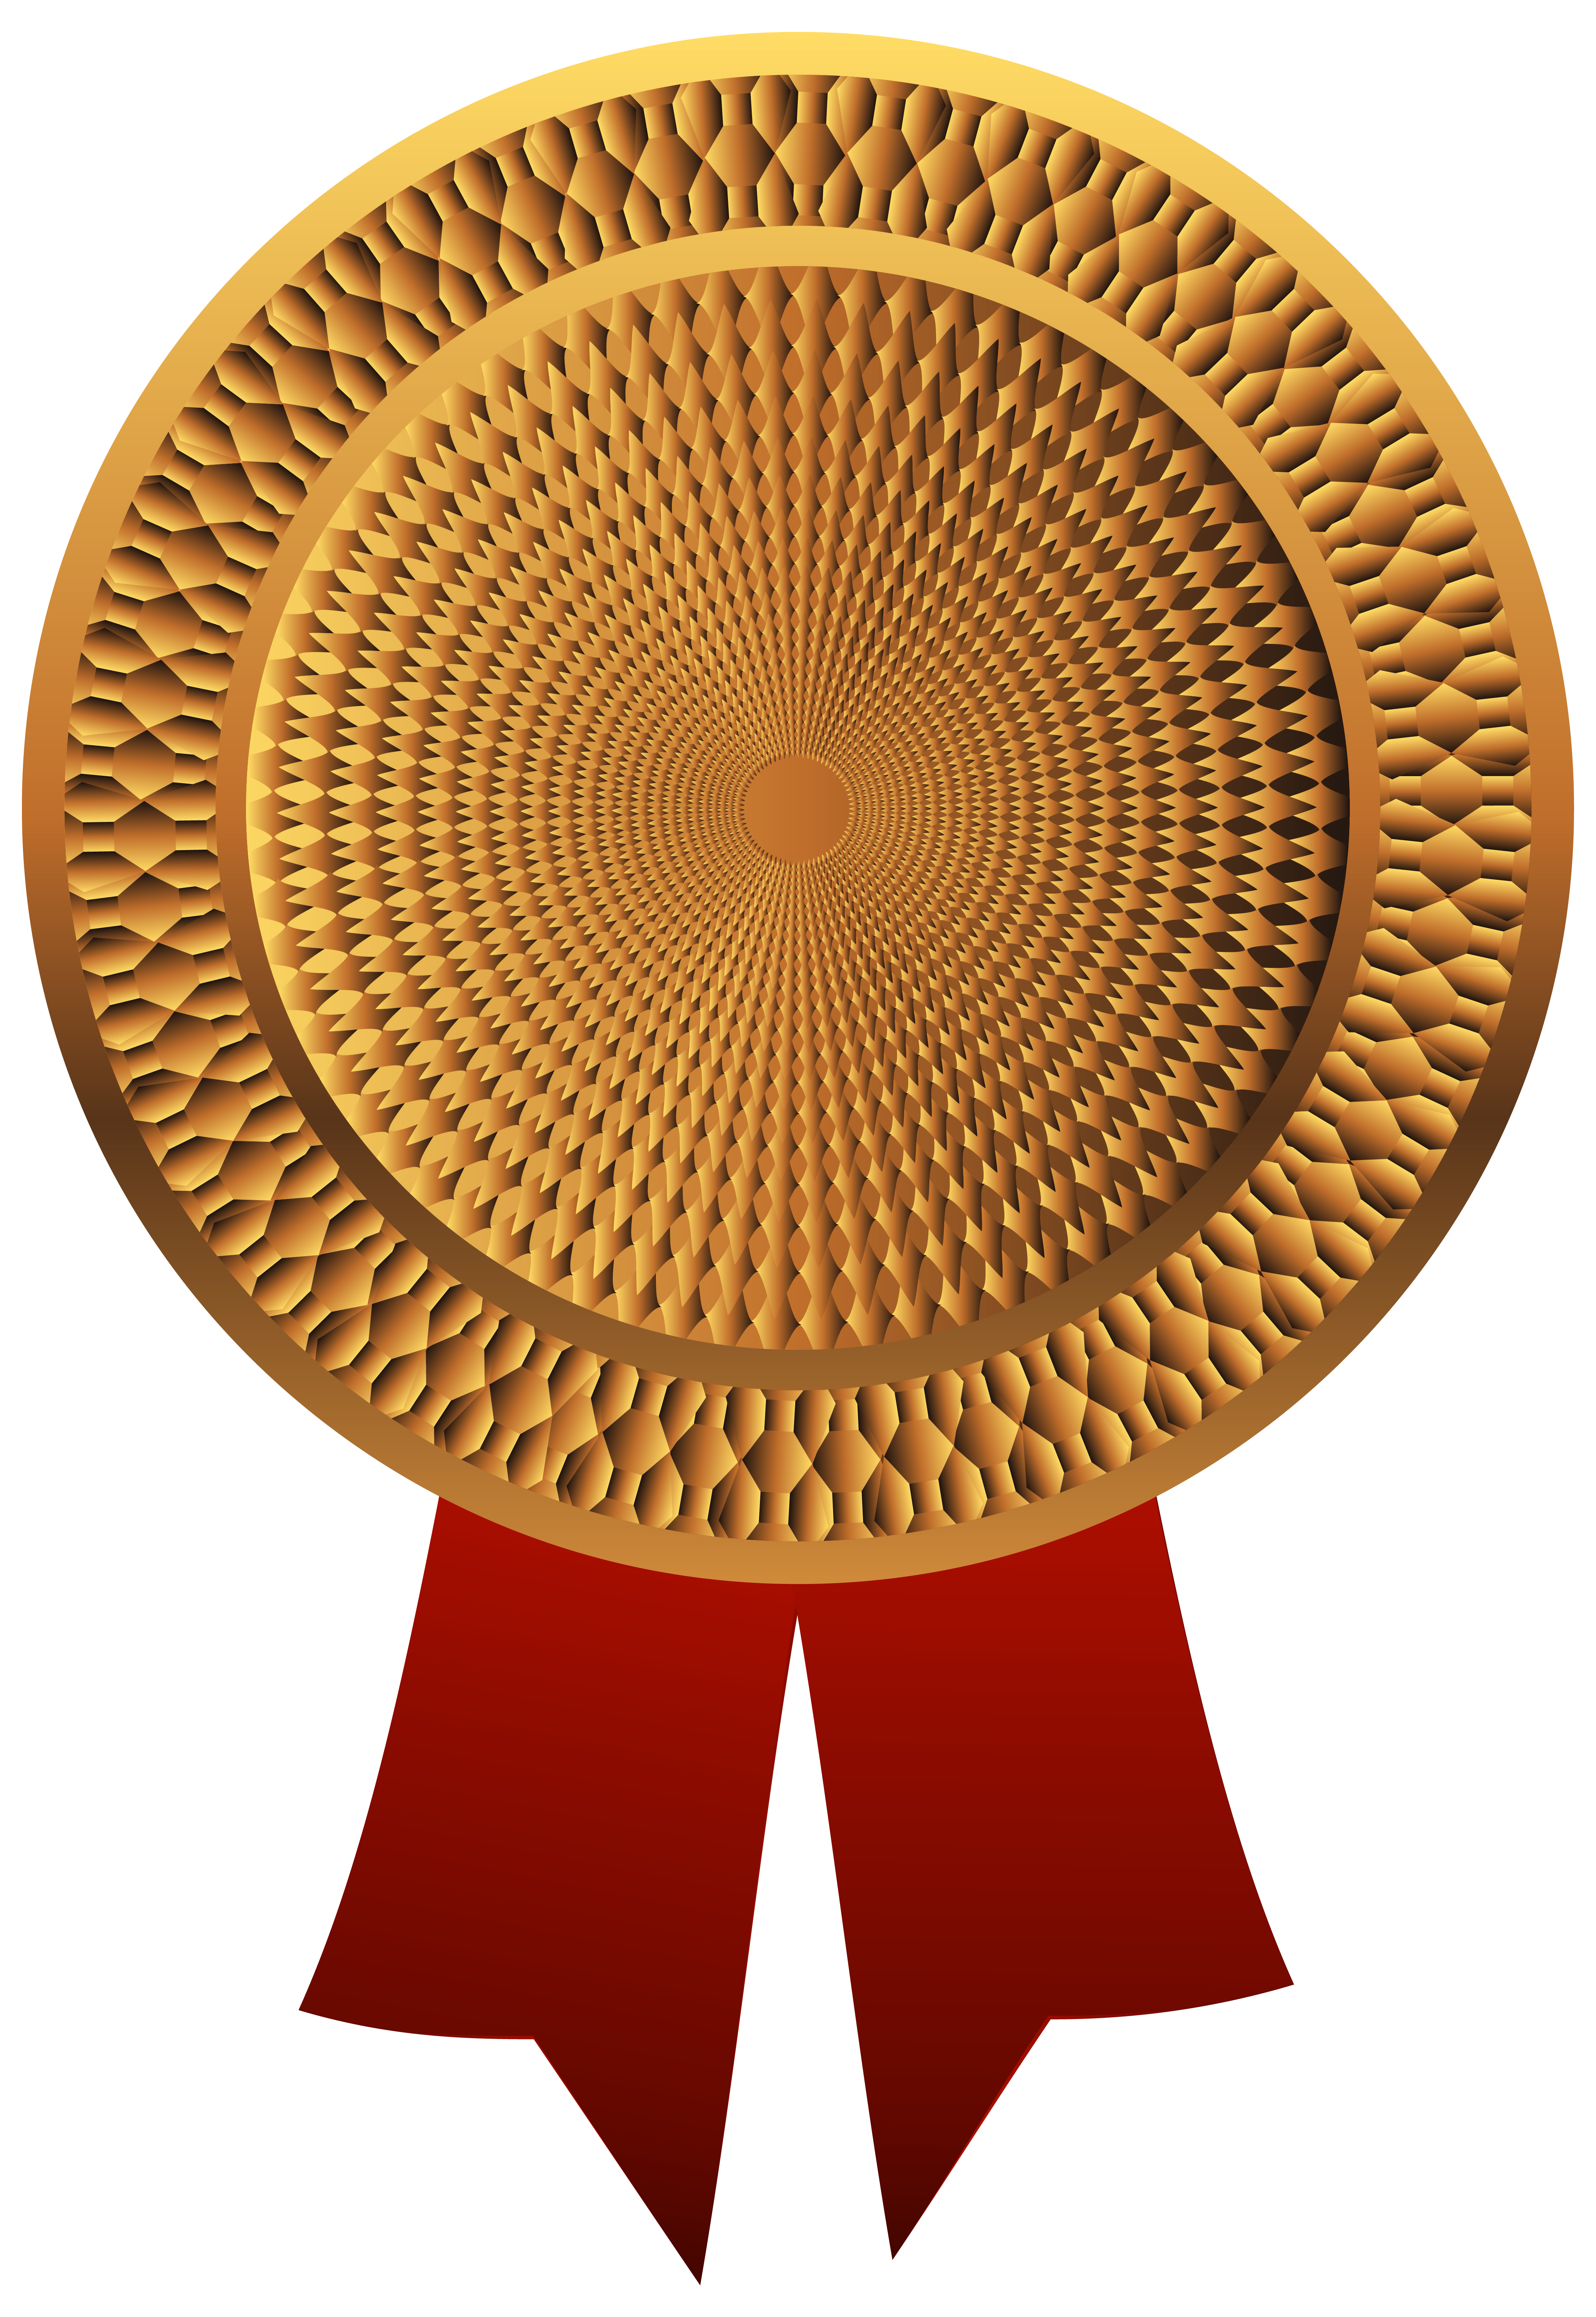 Medaglia d'oro